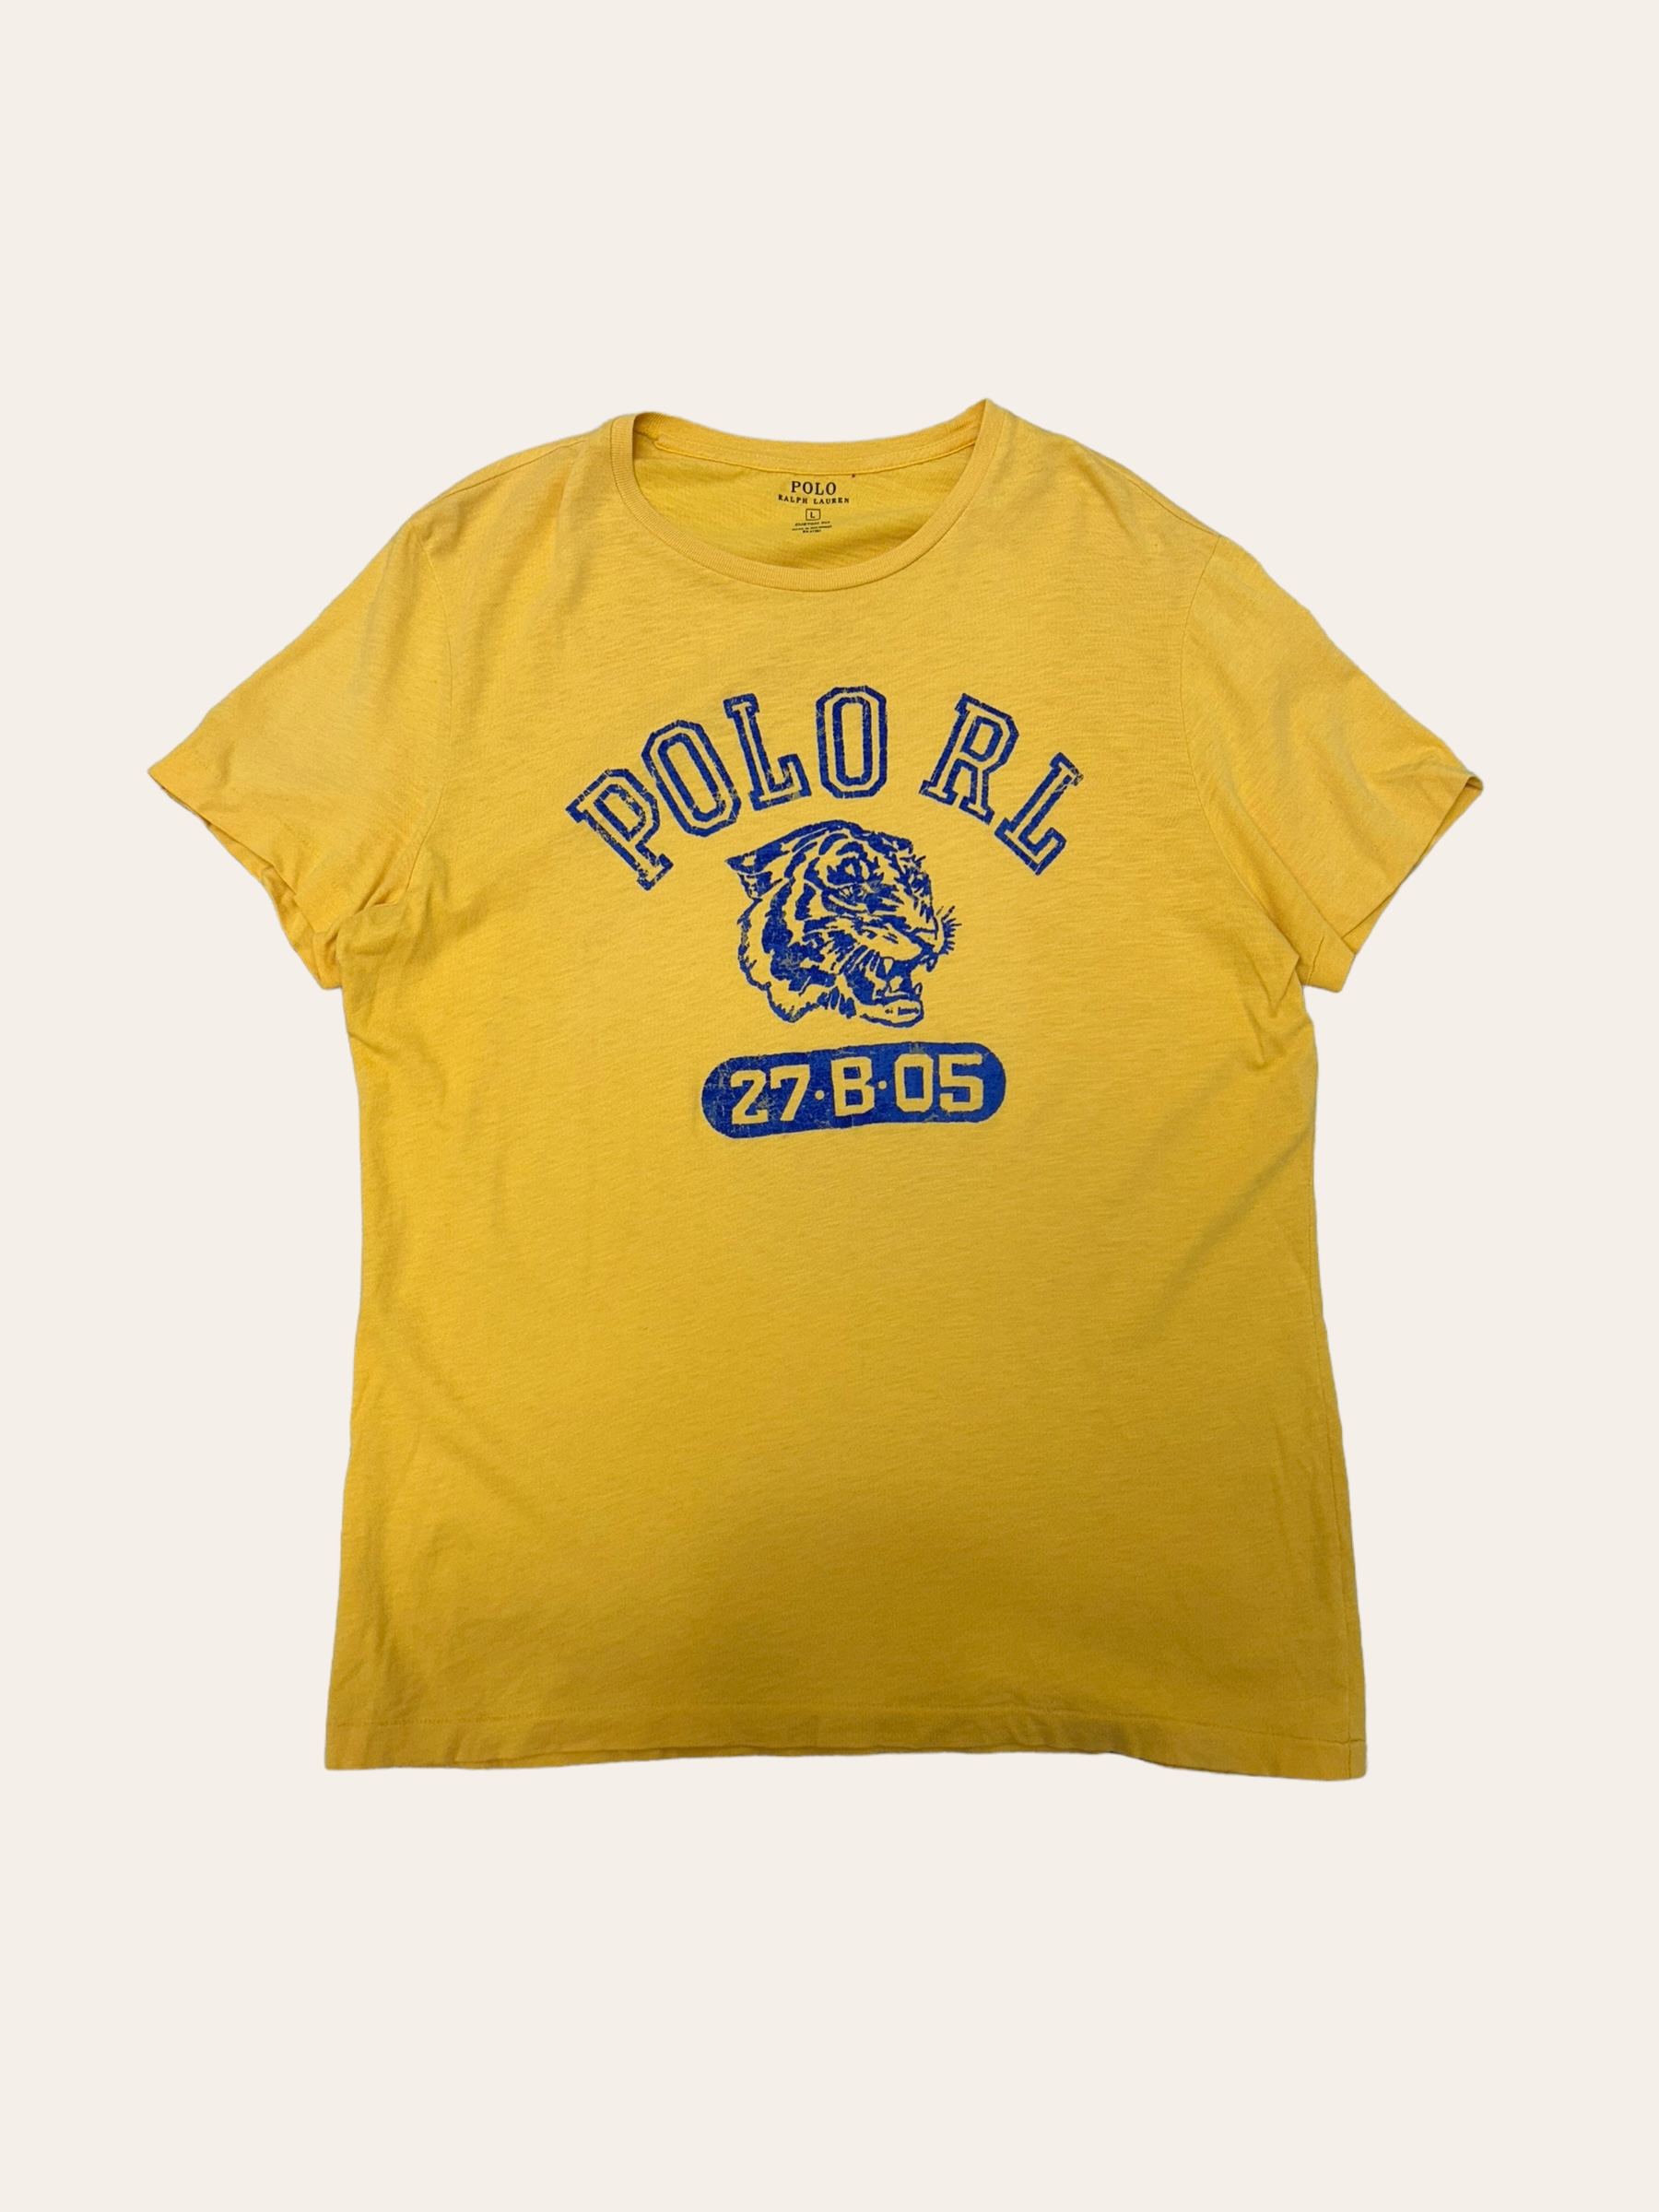 Polo ralph lauren yellow tiger printing T-shirt L